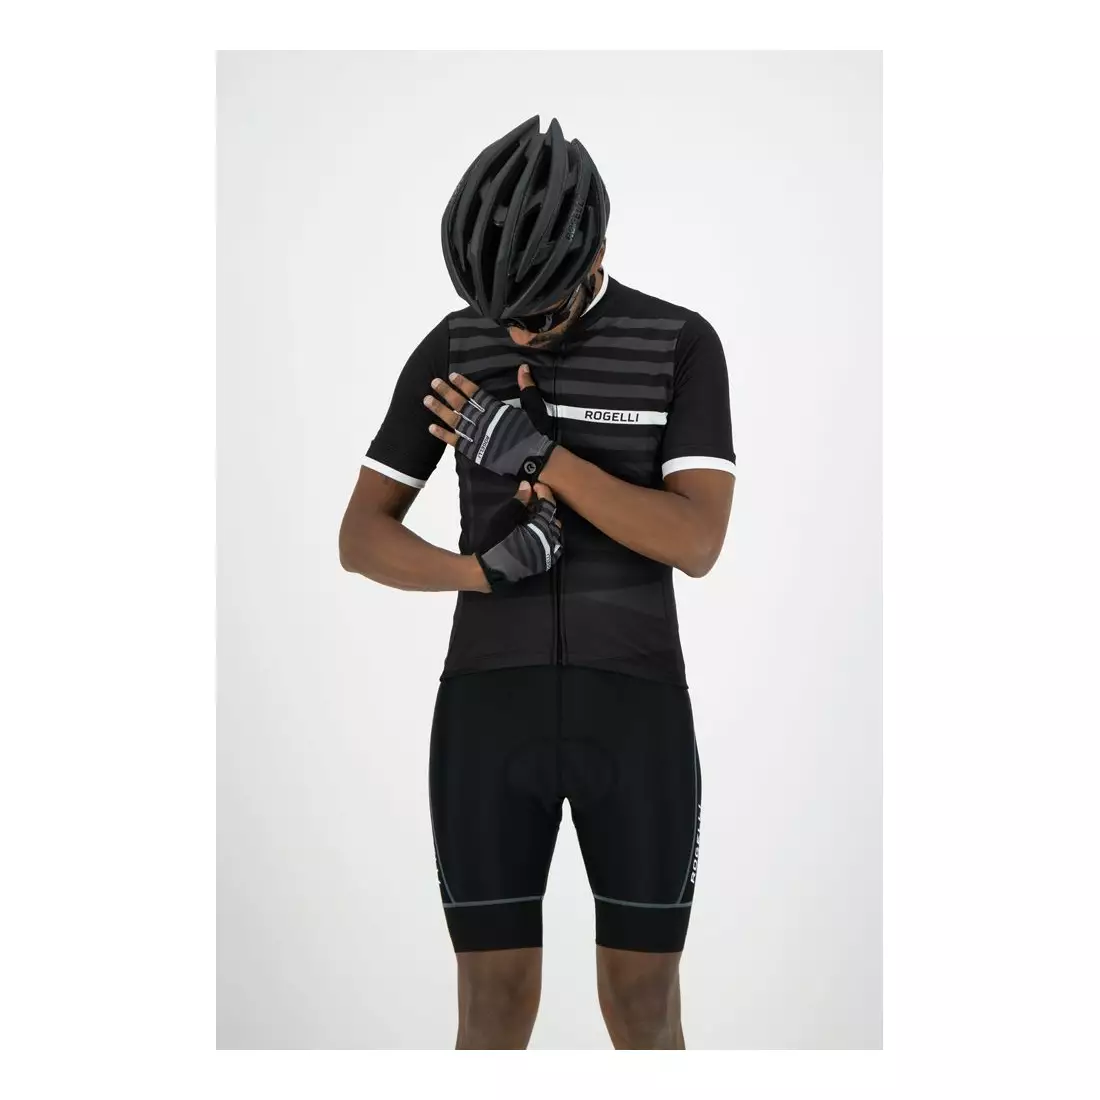 ROGELLI men's cycling gloves STRIPE black 006.310